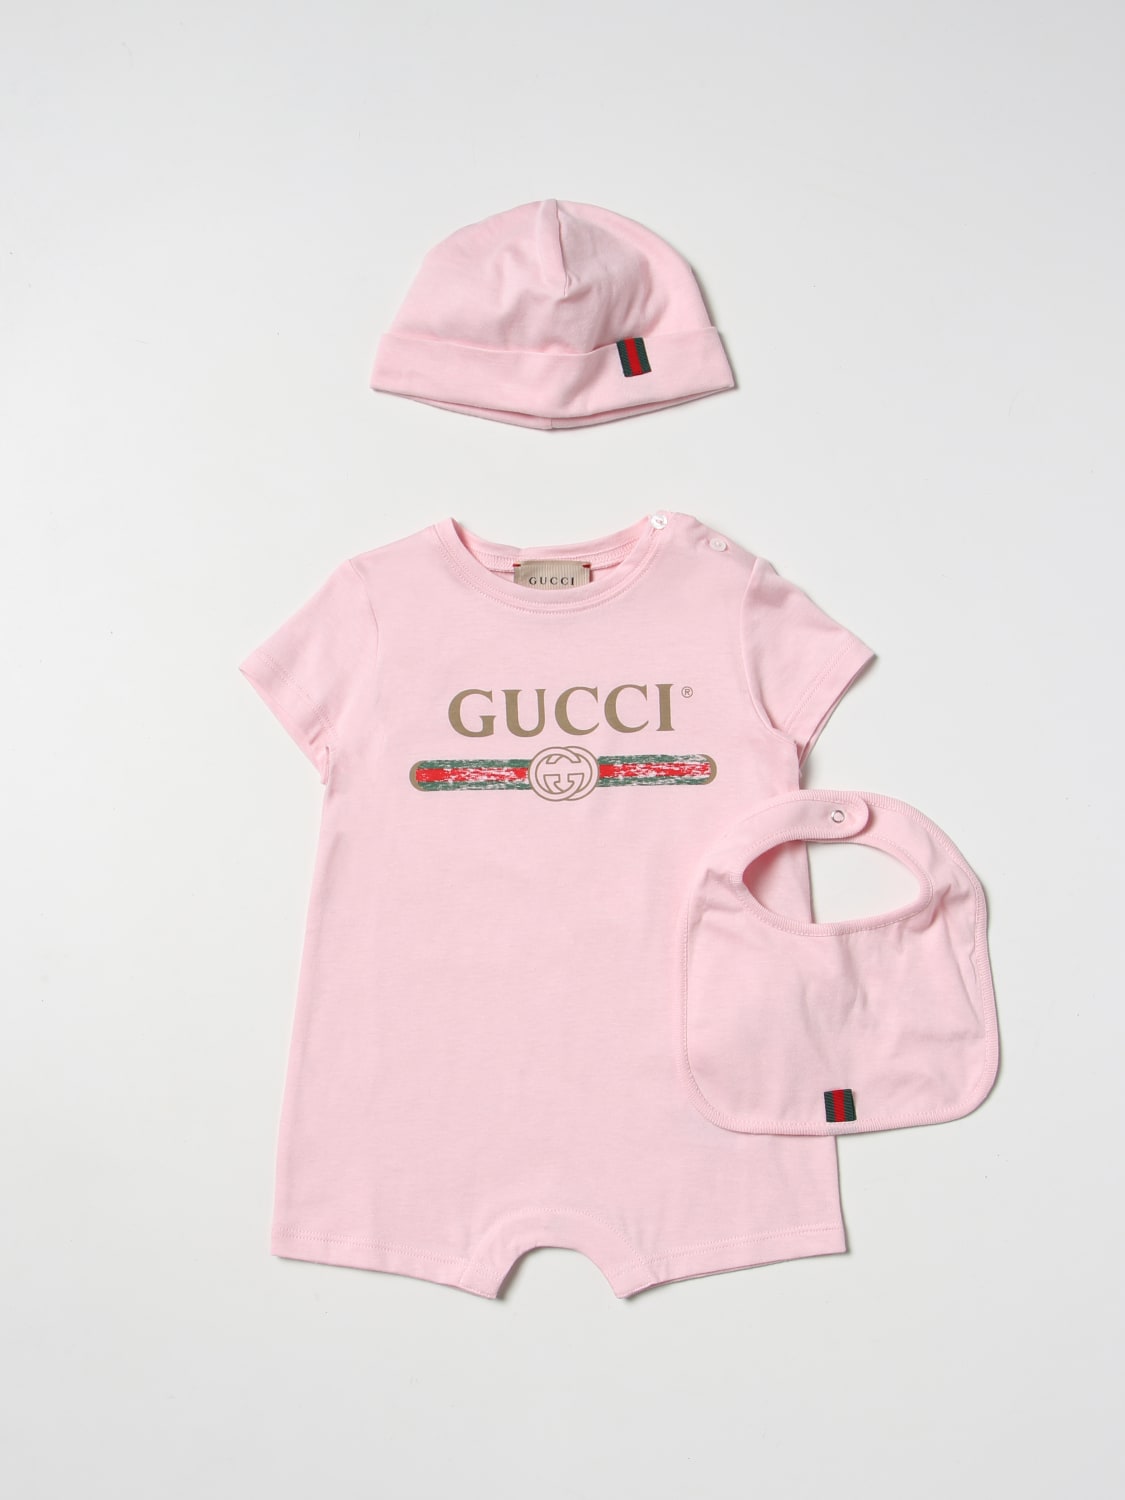 Gucci, Dresses, Gucci Pink Dress